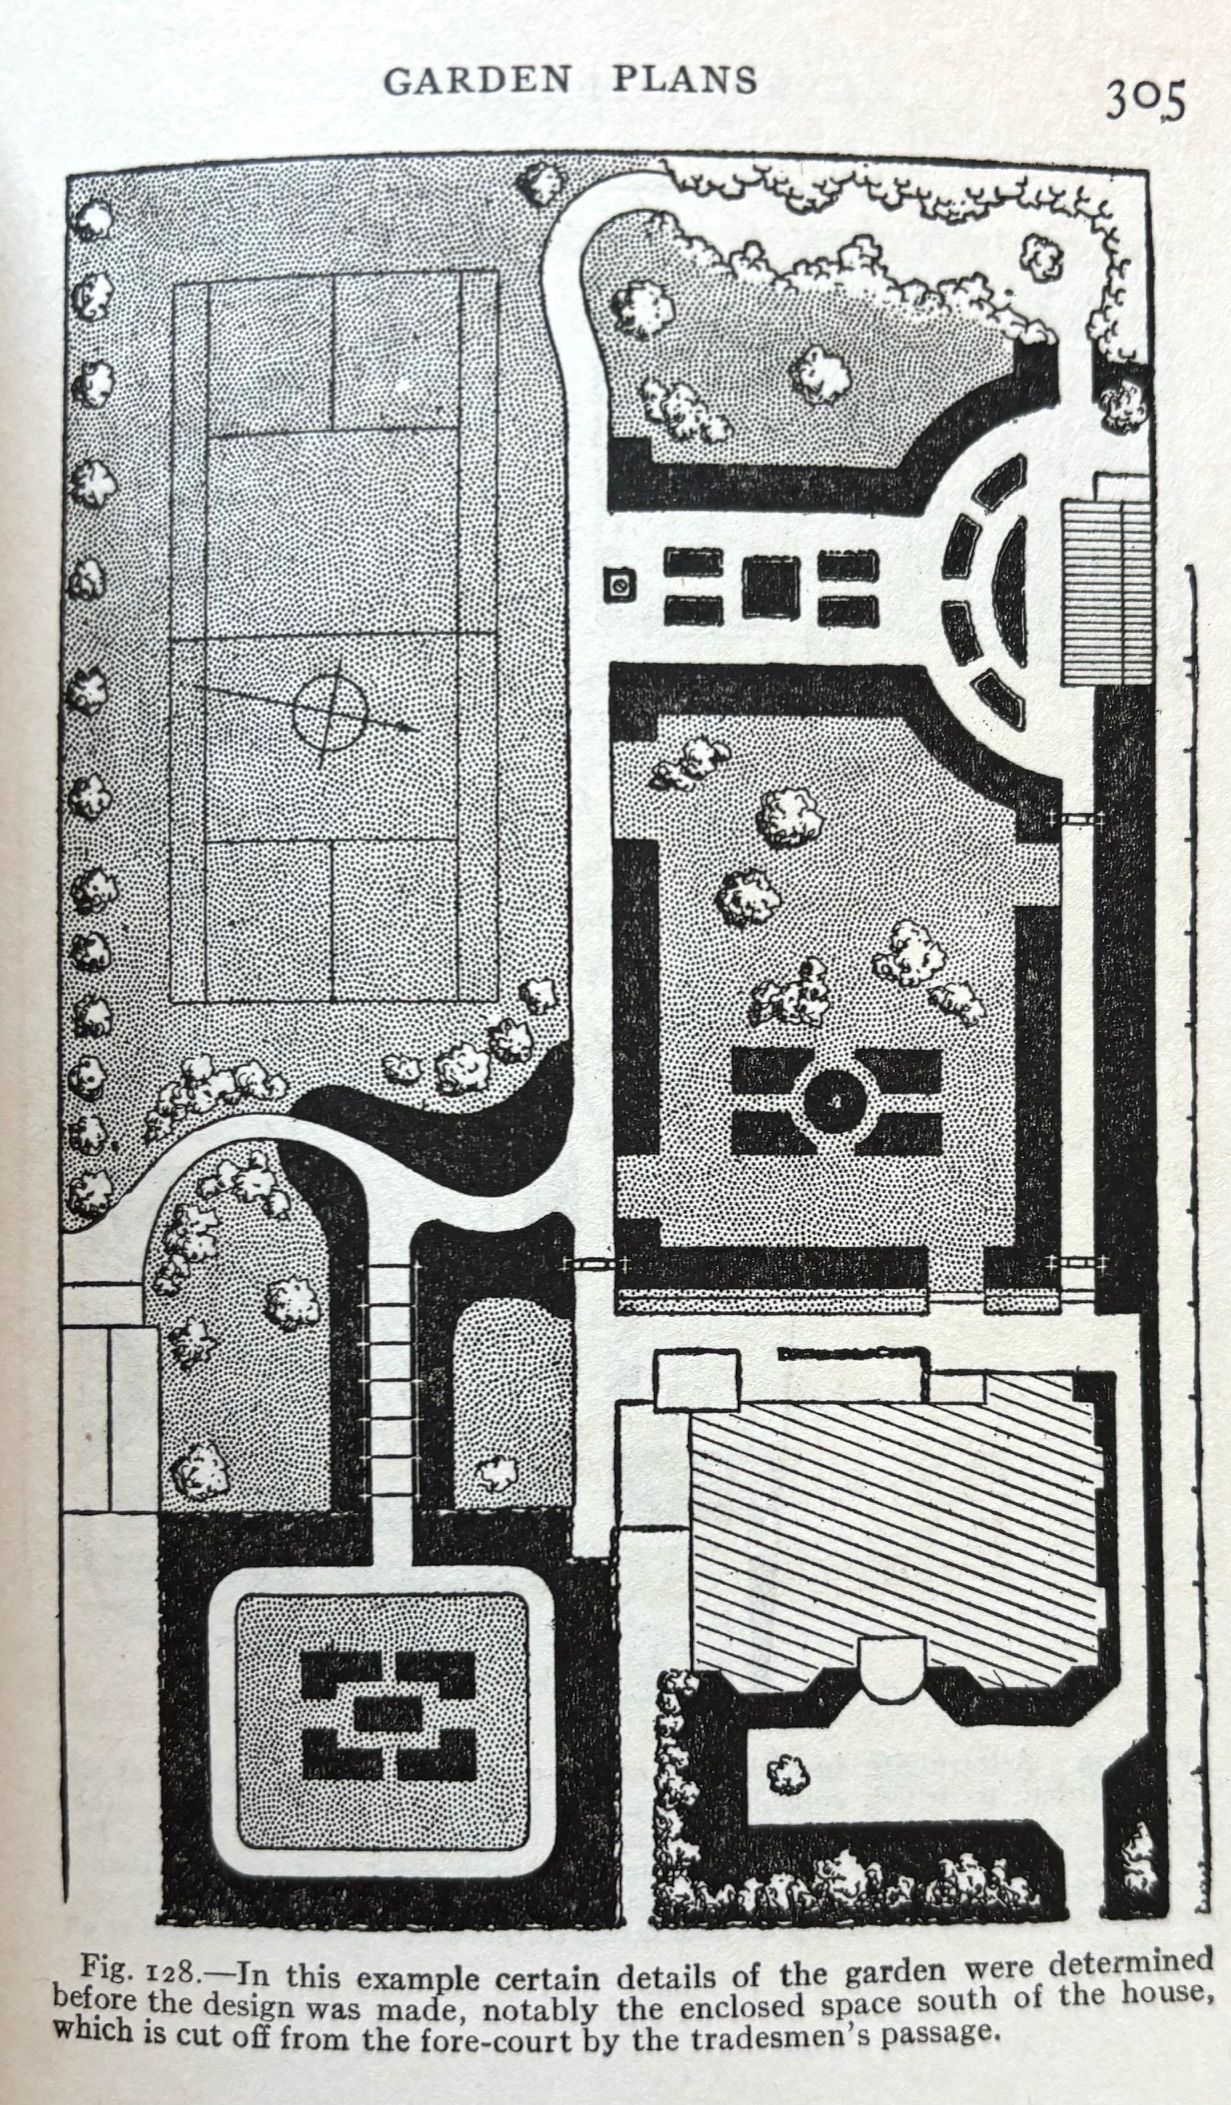 (*NEW ARRIVAL*) Garden Planning (W.S. Rogers)